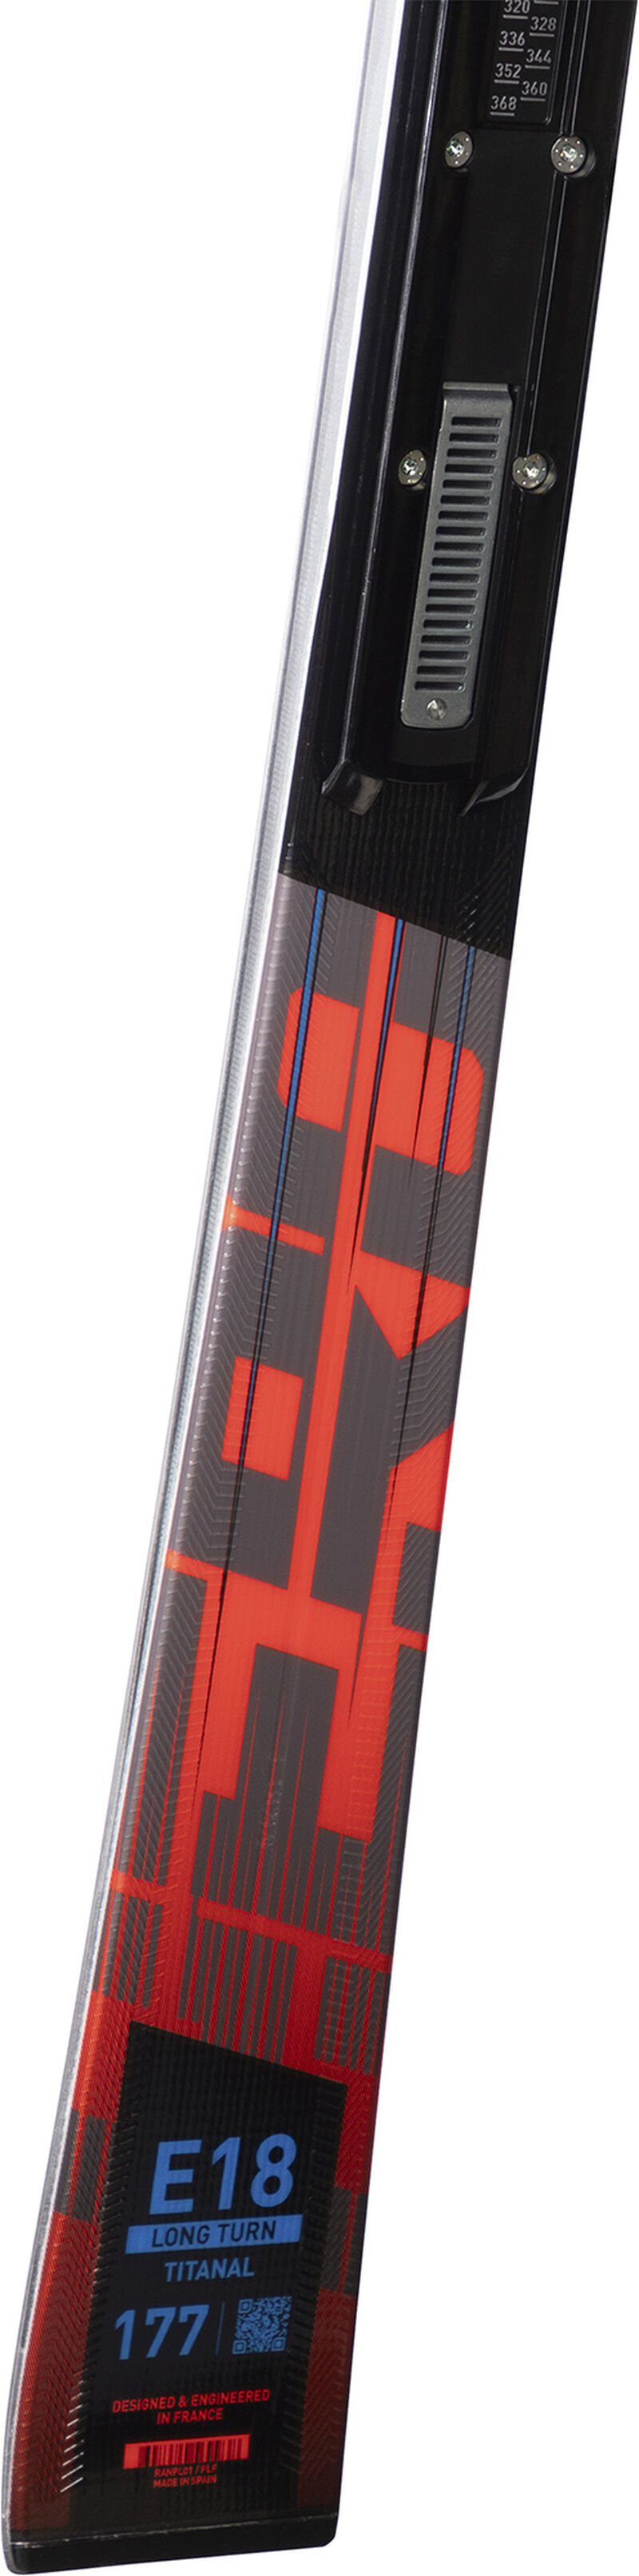 Unisex's Racing Skis HERO ELITE LT TI KONECT